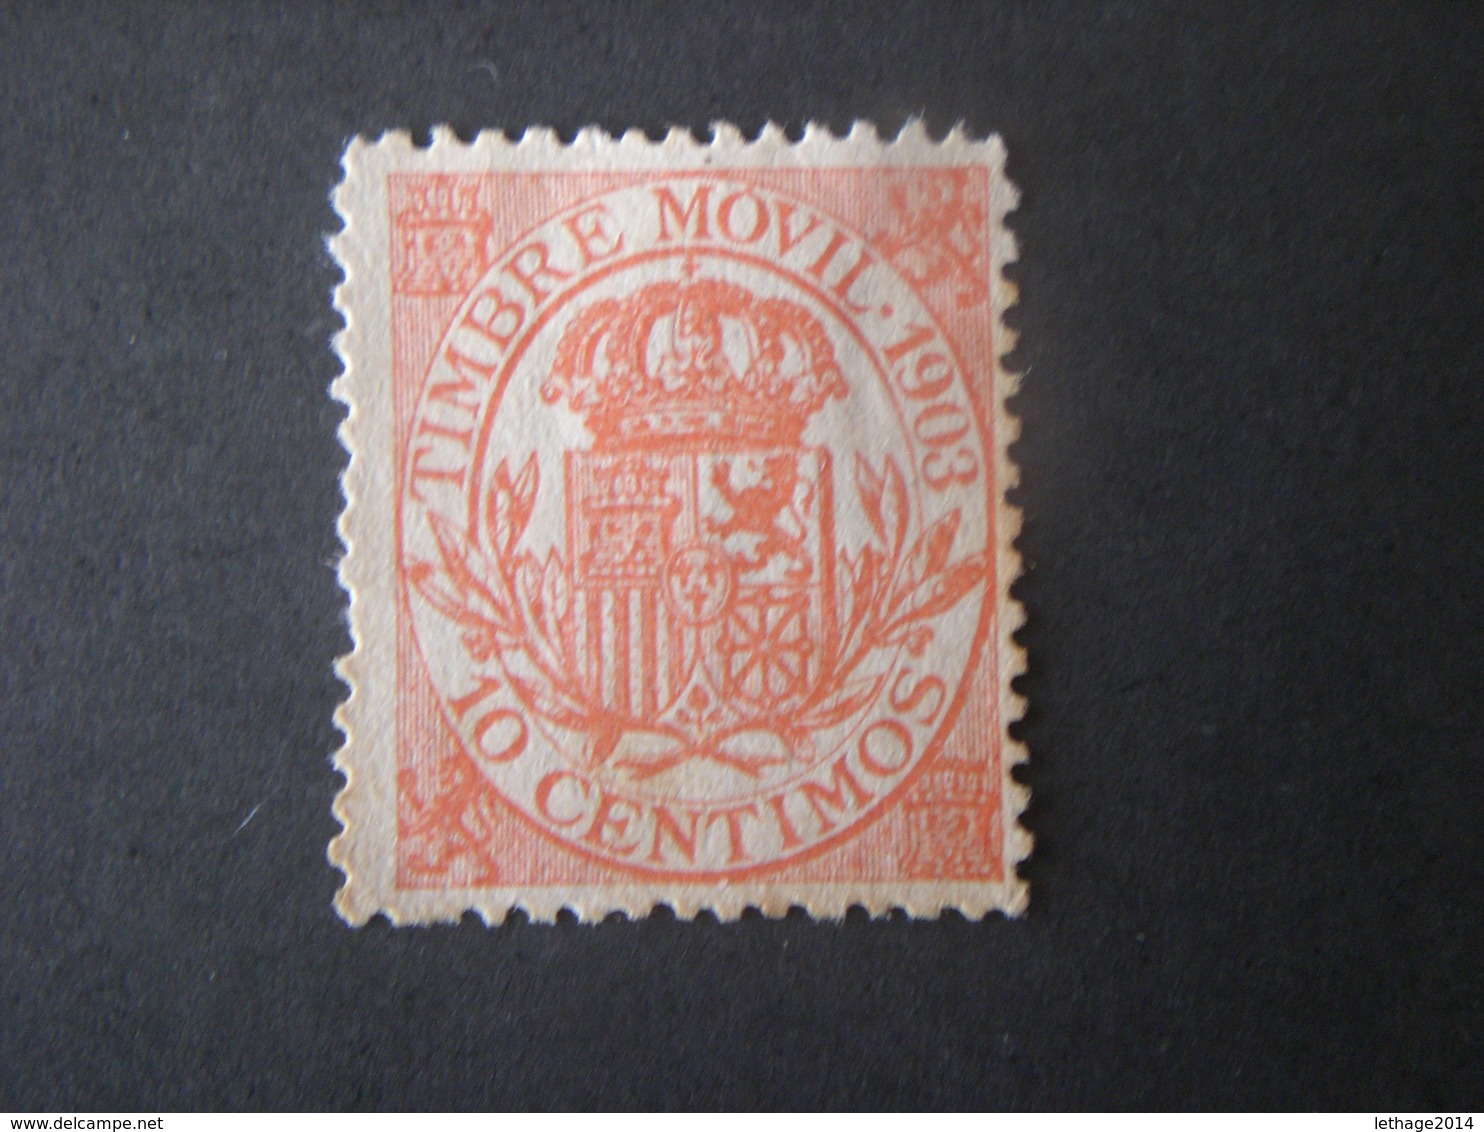 SPAGNA ESPANA 1903 SCUDO DI SPAGNA - Unused Stamps